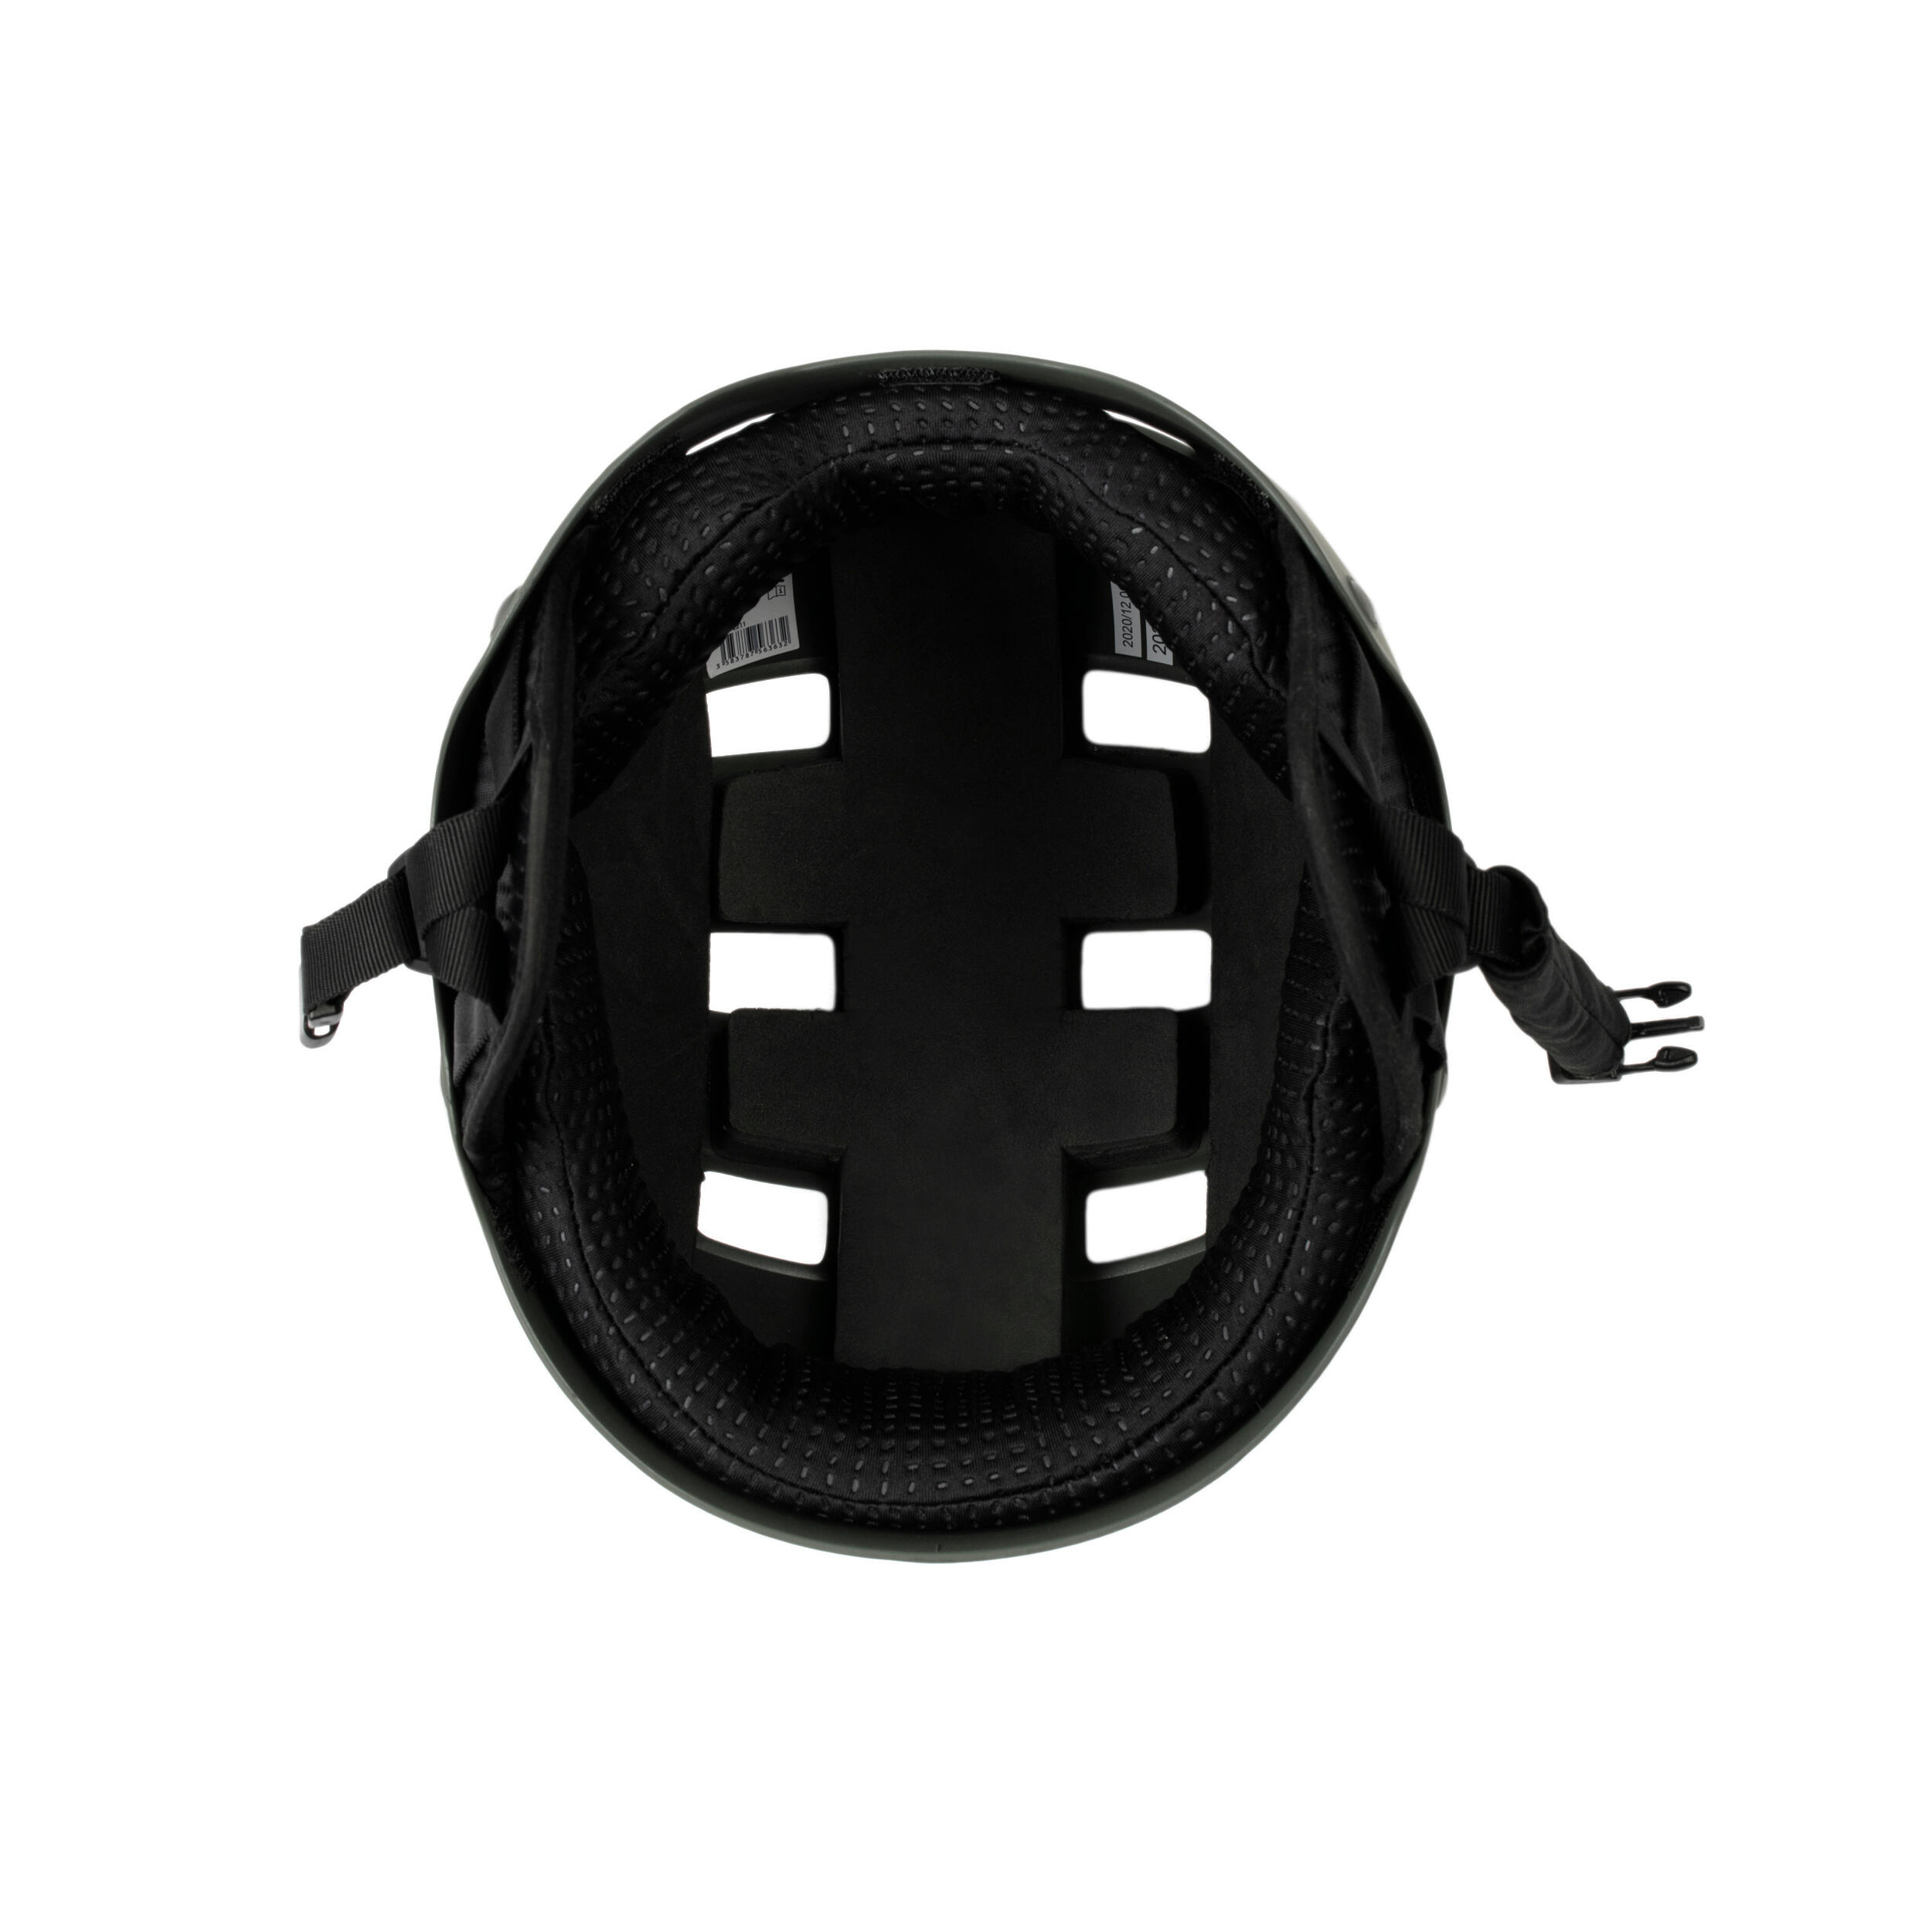 Water sports helmet - 500 Khaki 5/8